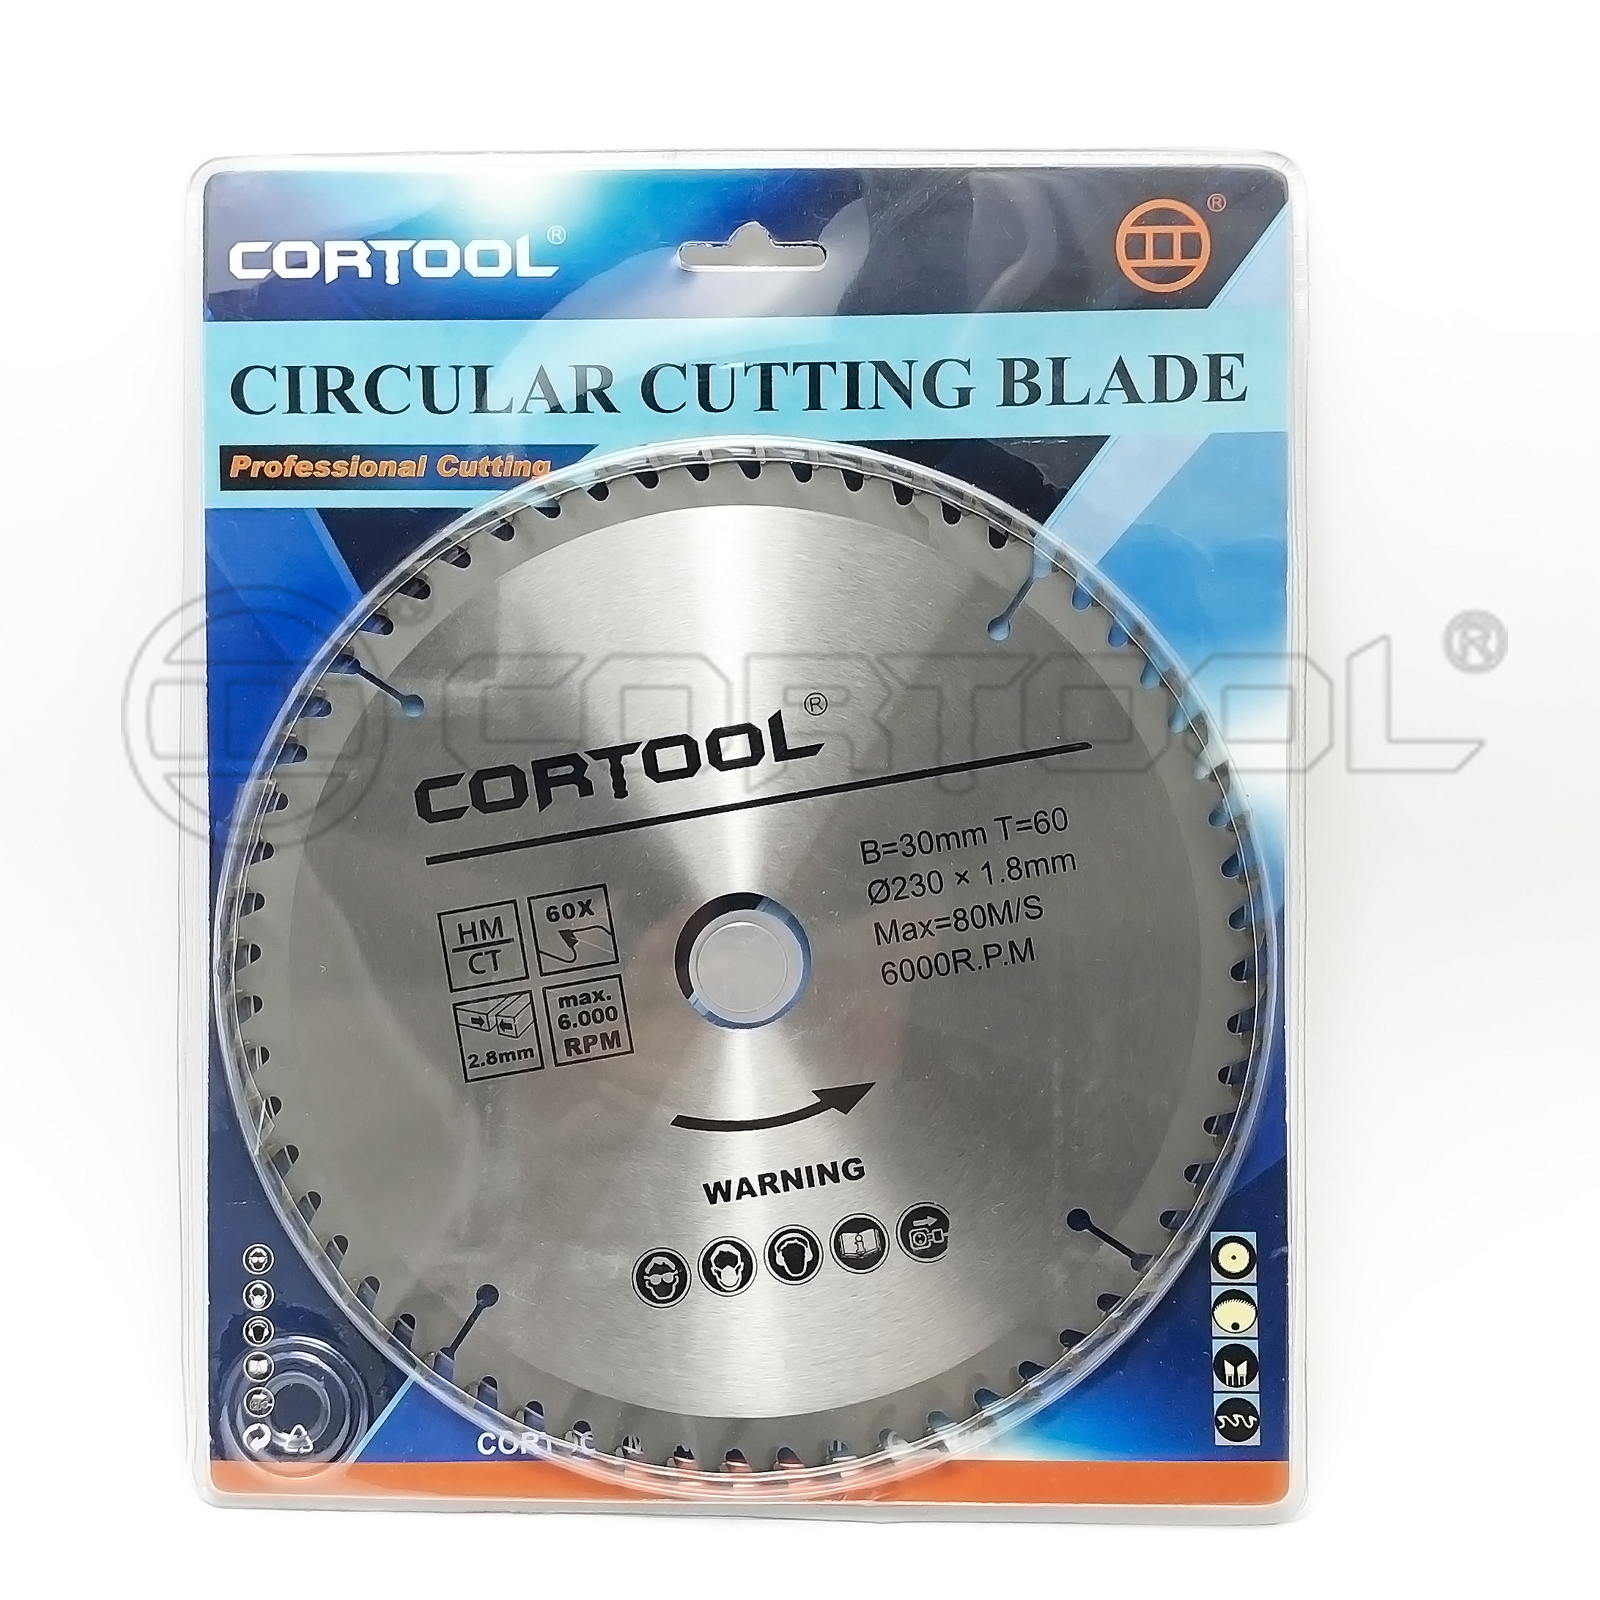 Circular saw blade for wood working